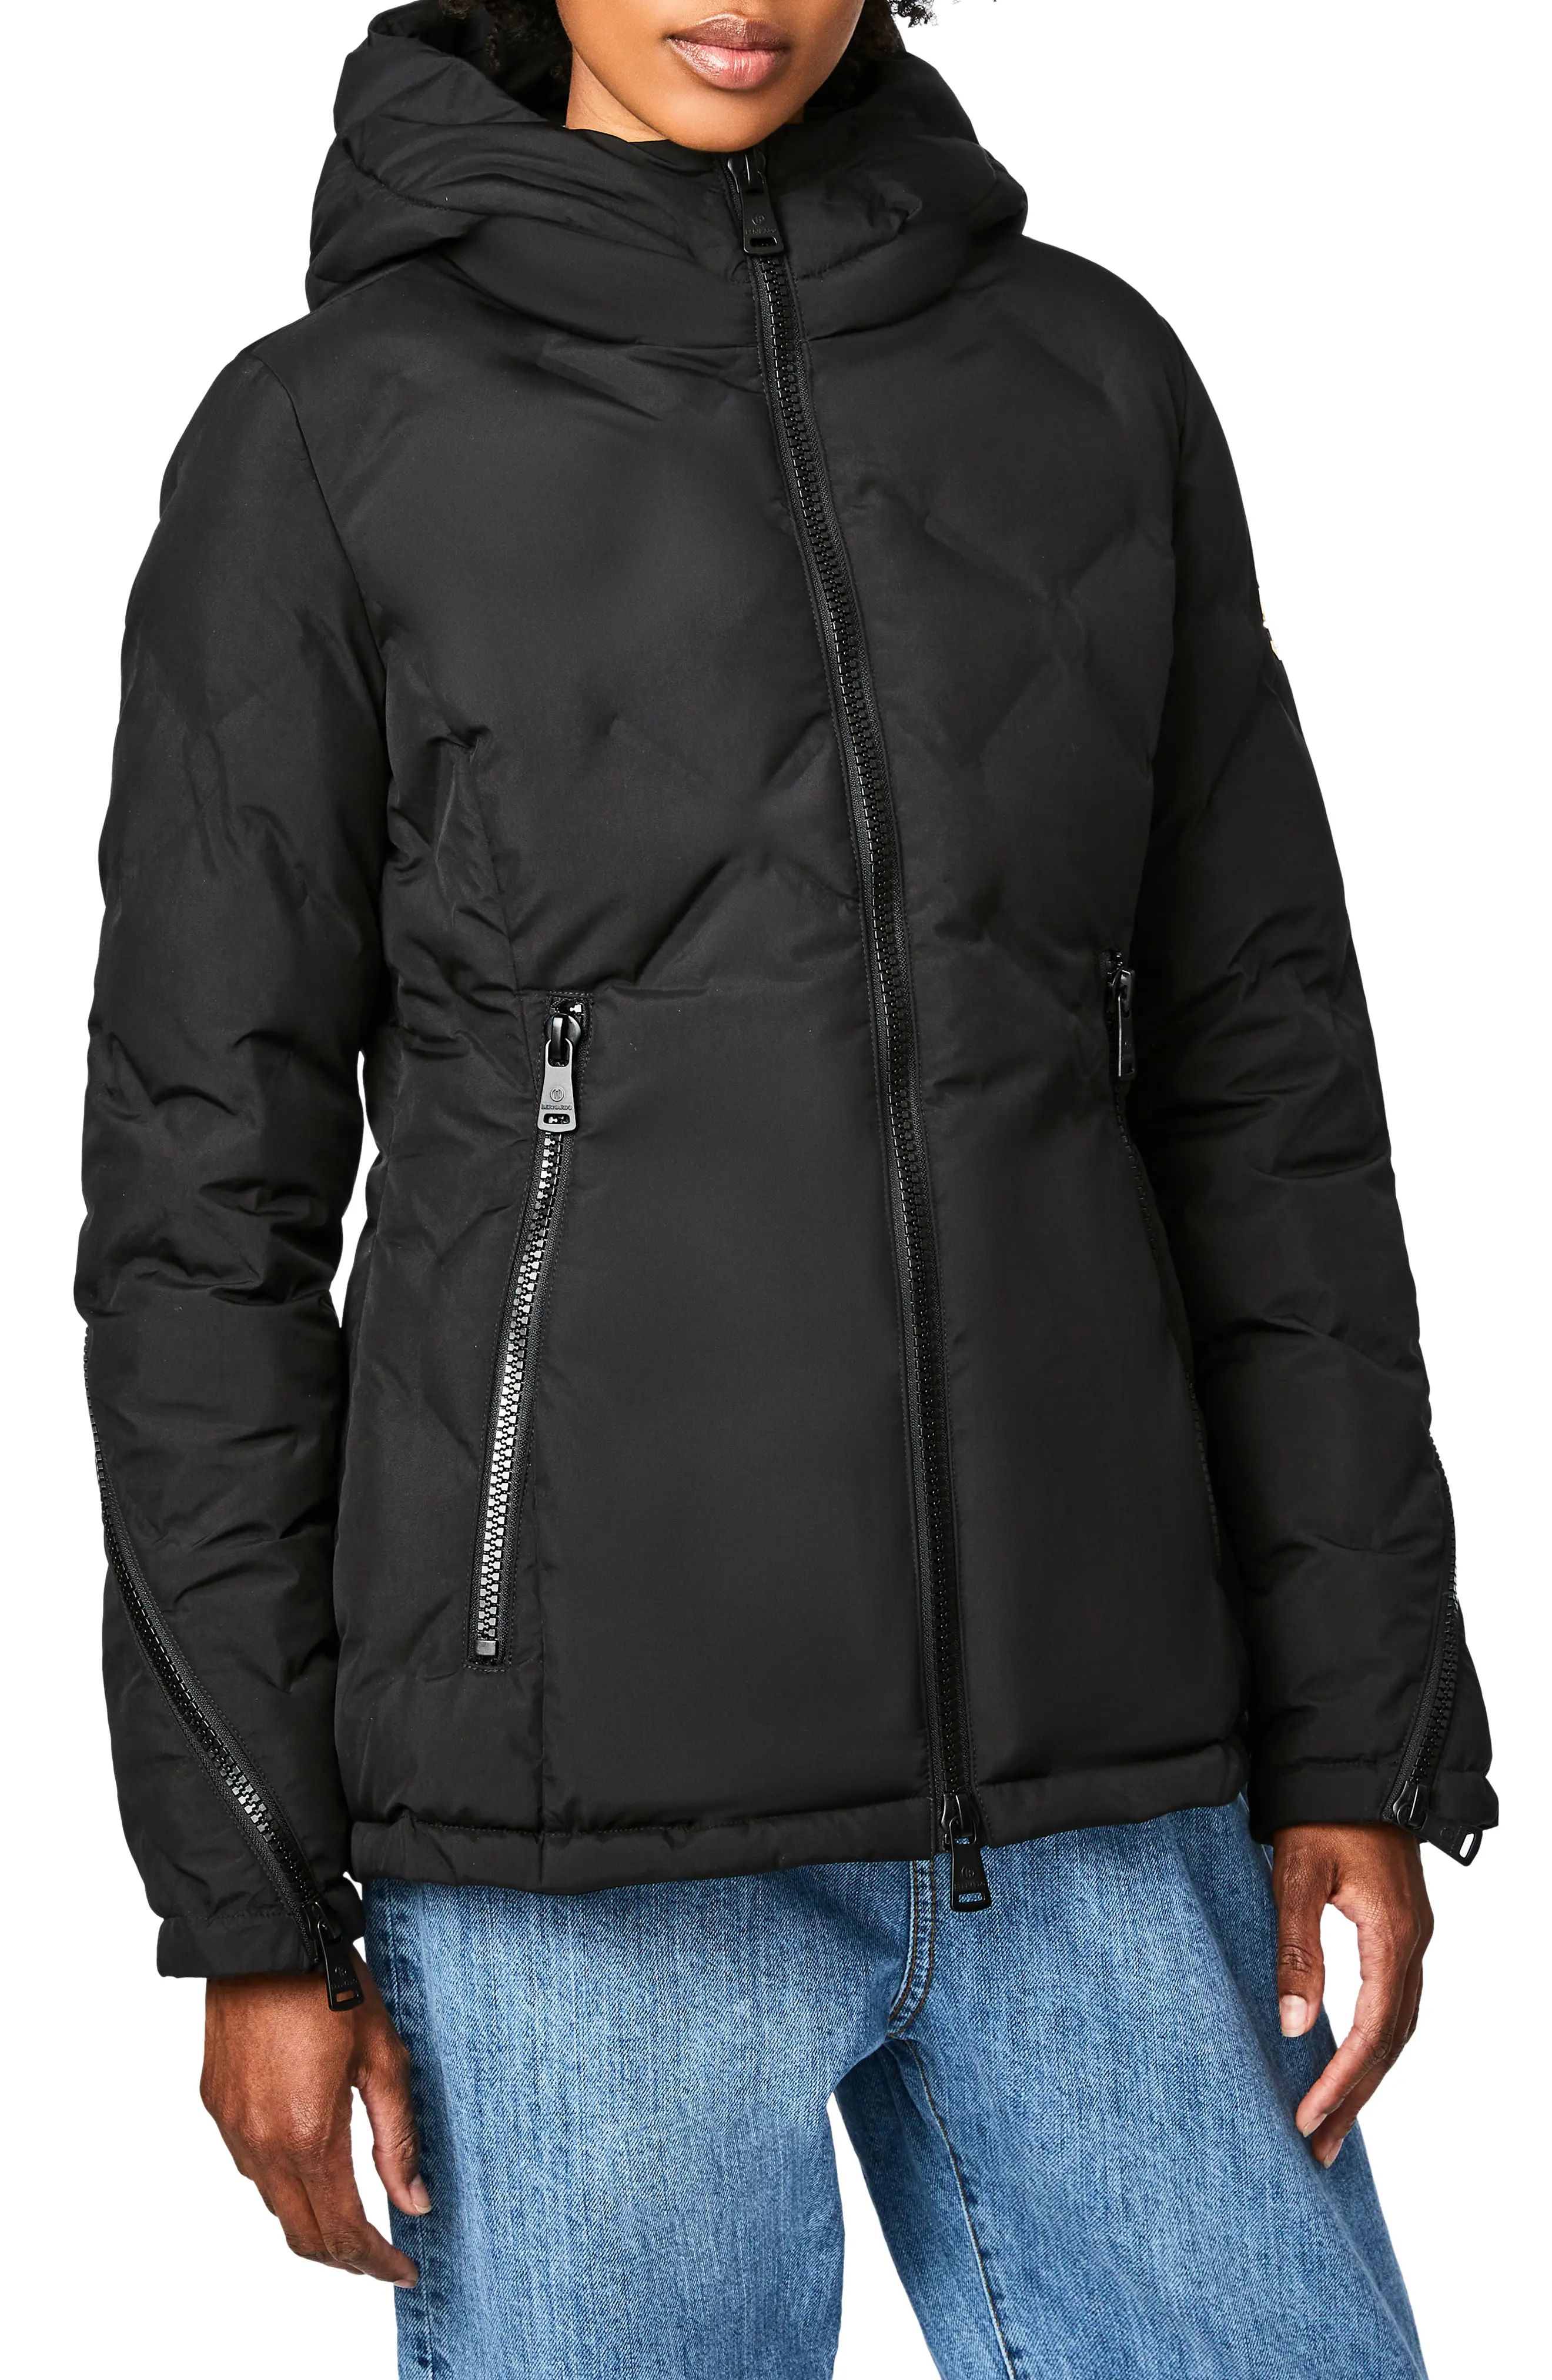 Bernardo Hooded Puffer Coat, Size Medium in Black at Nordstrom | Nordstrom